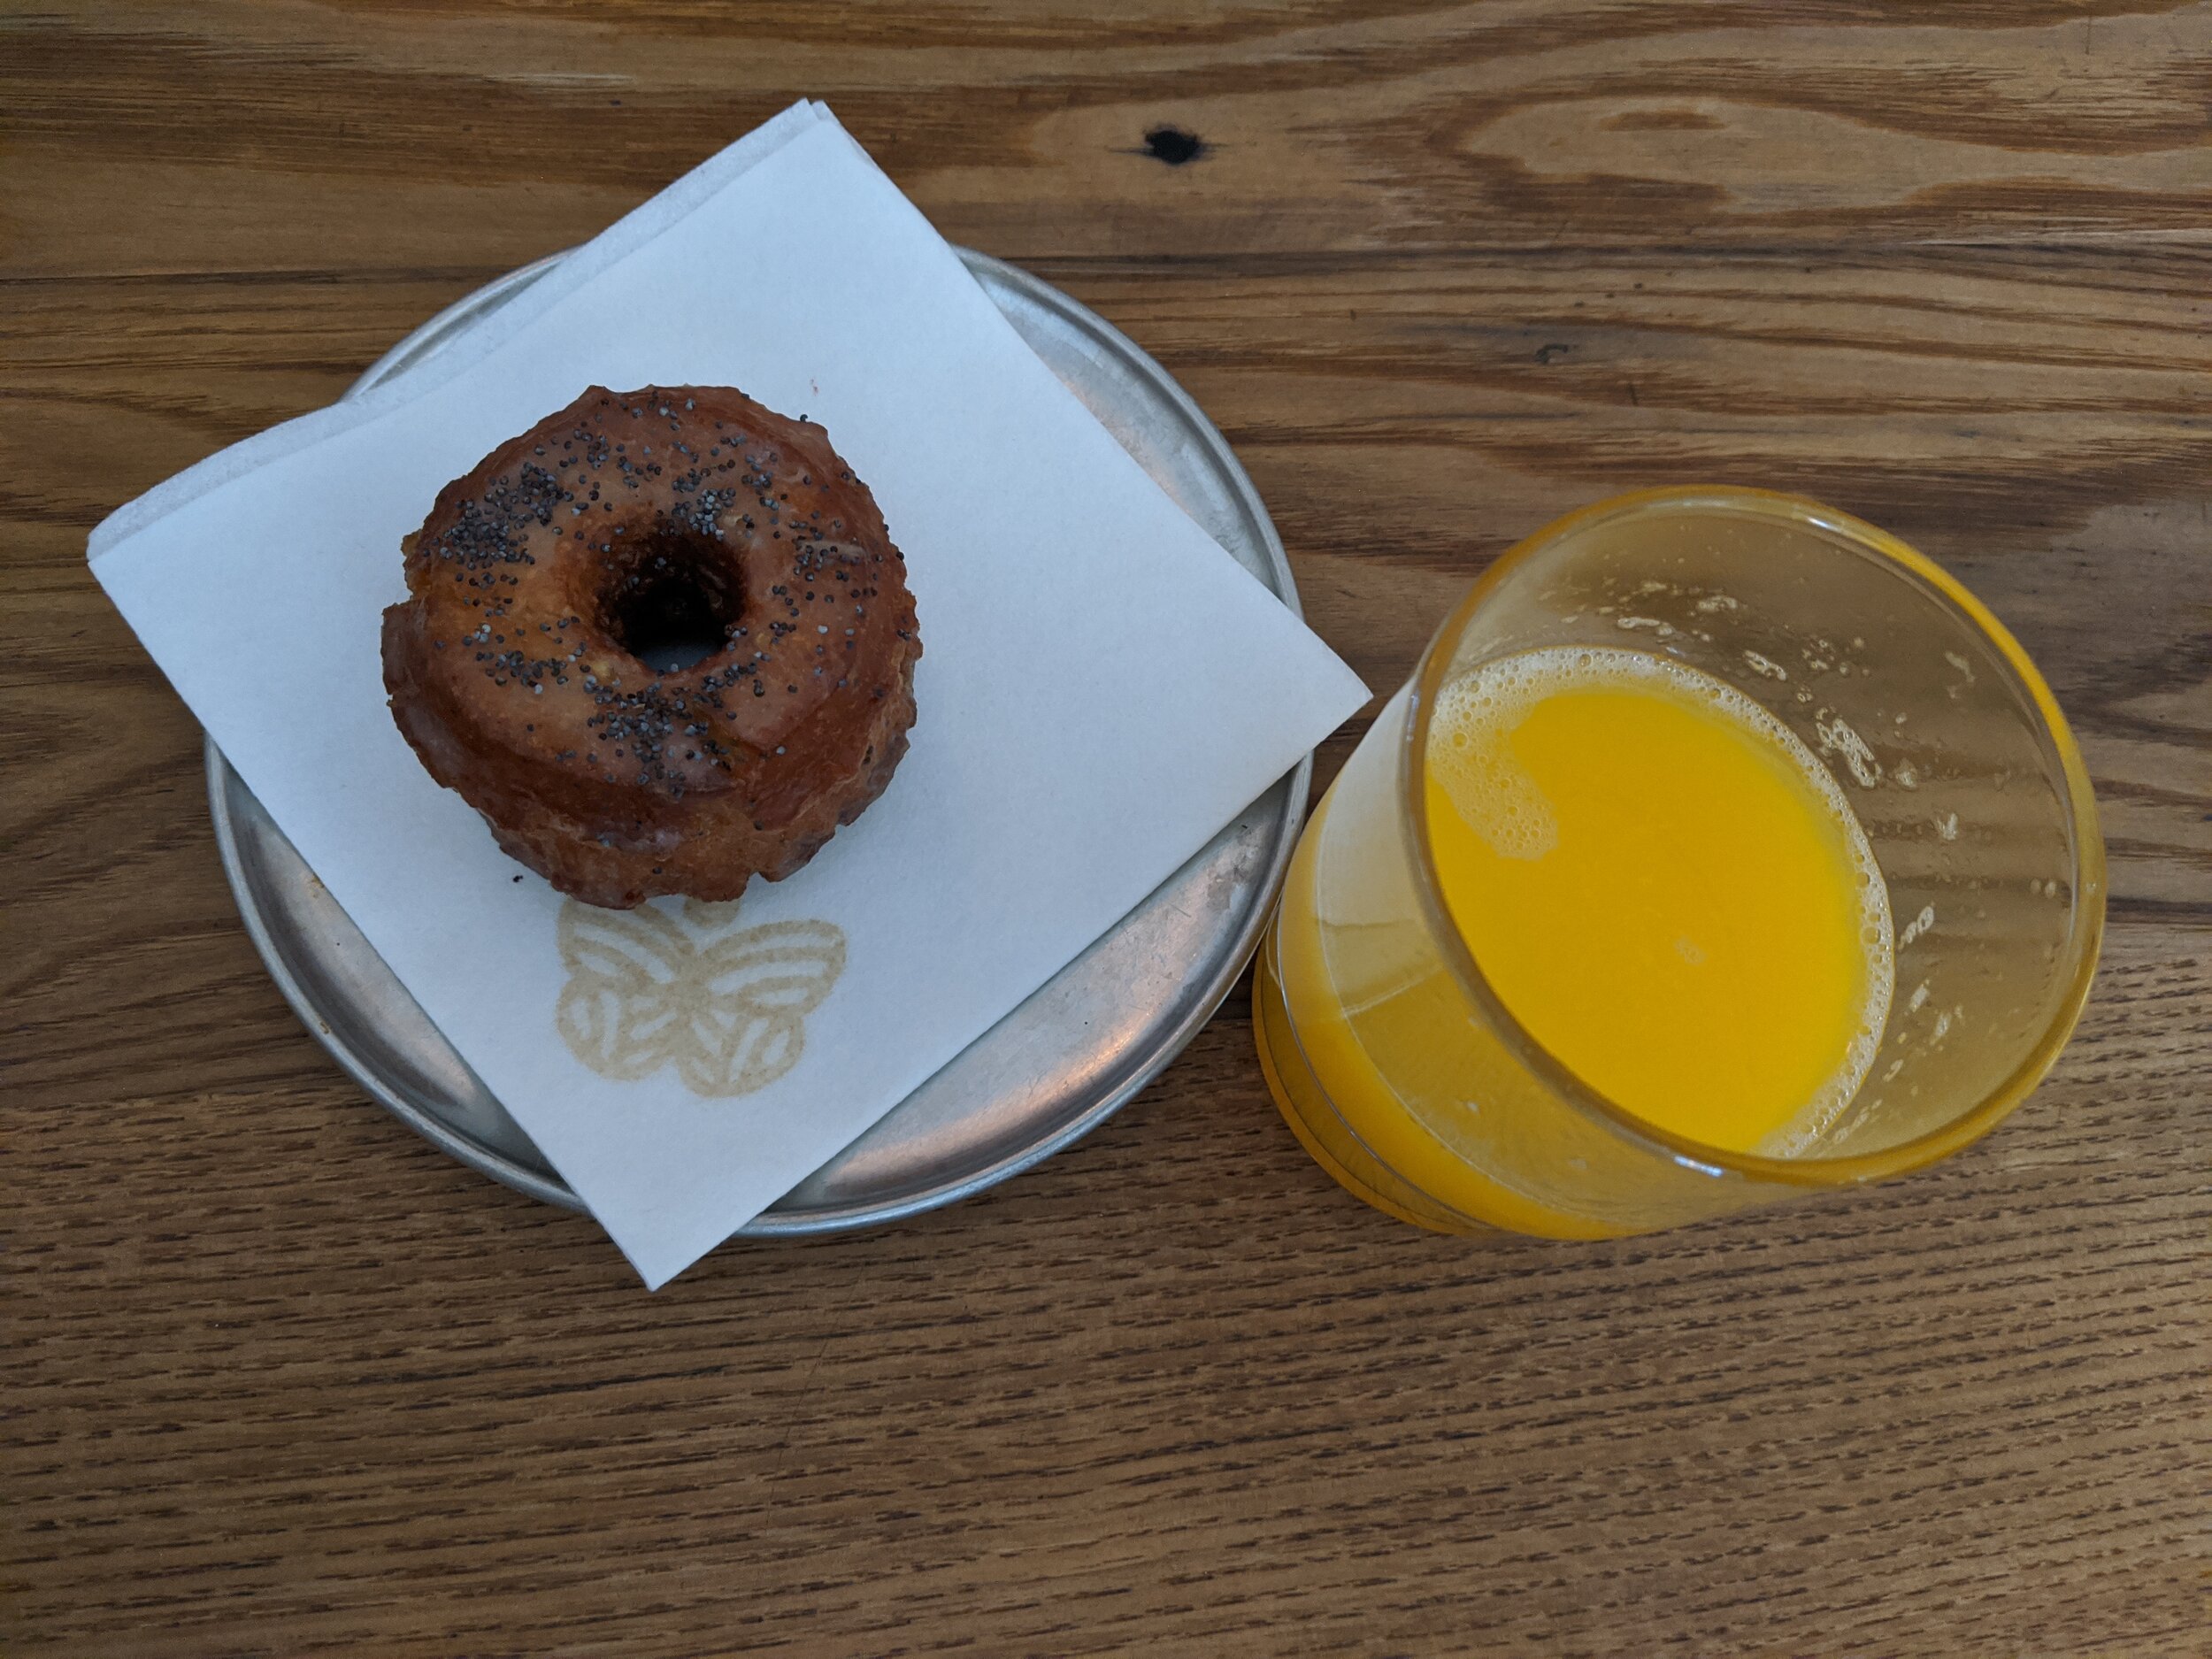 Milkweed donut and orange juice